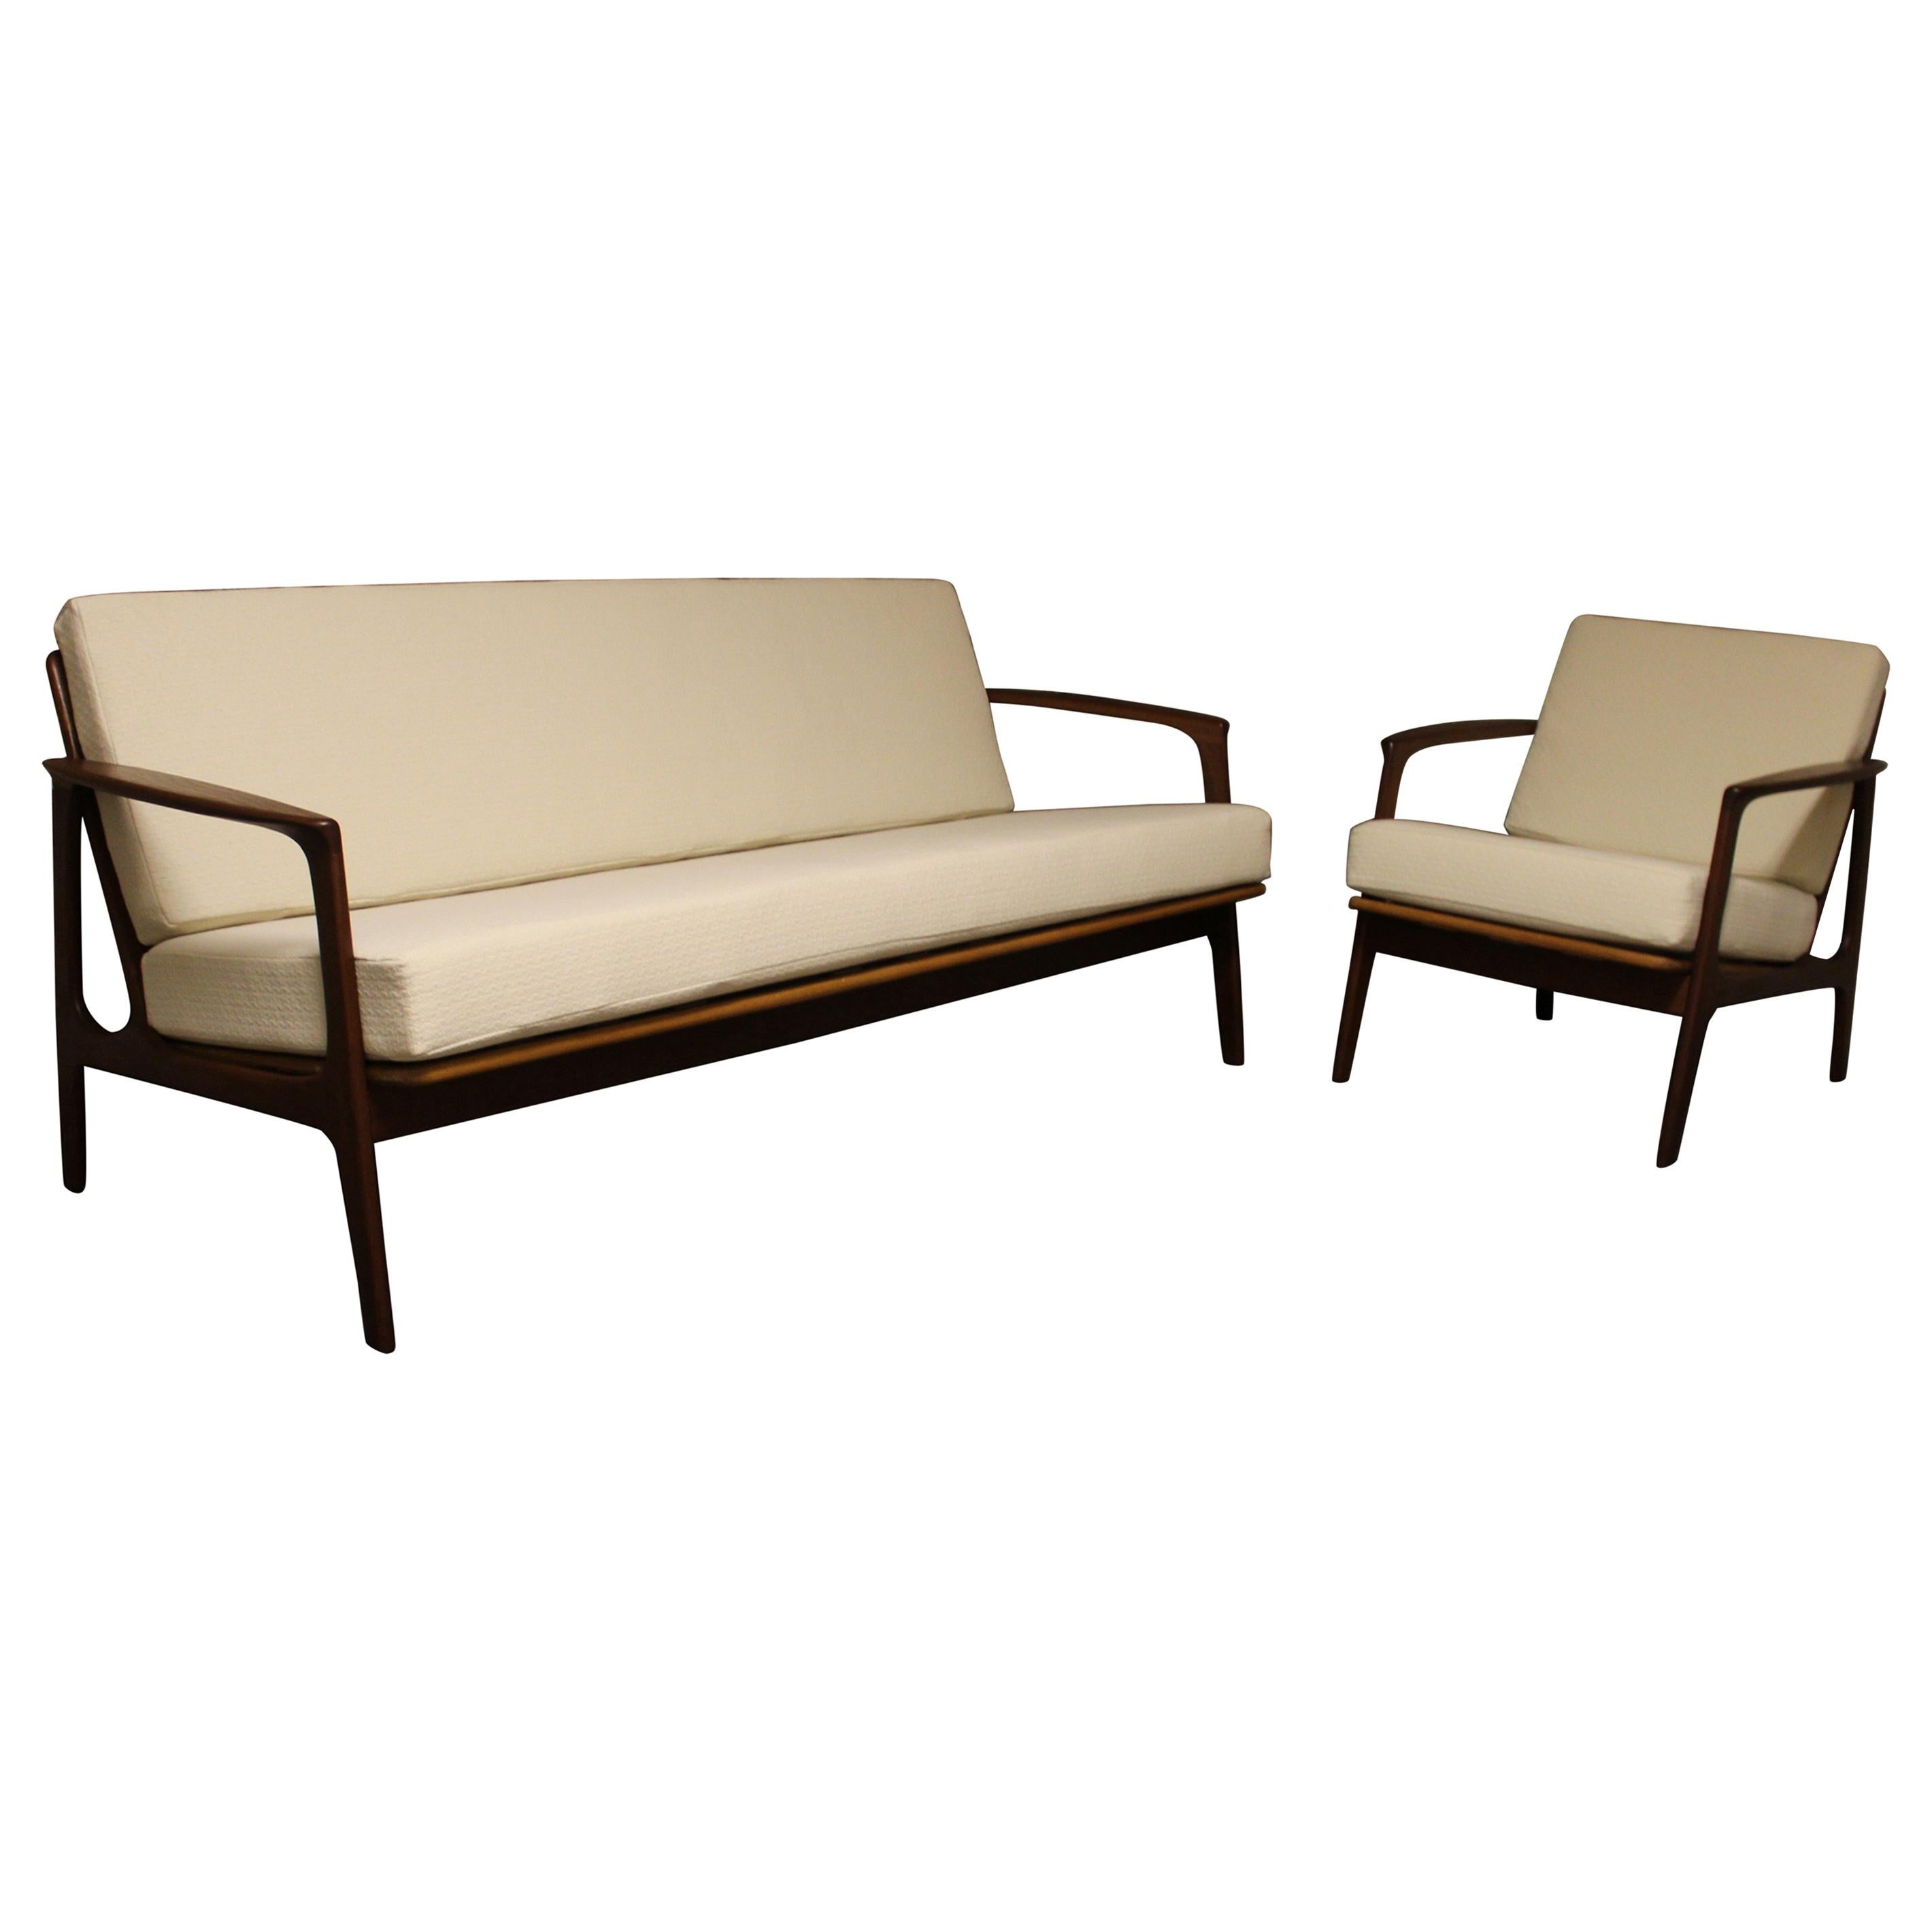 R. Huber Mid-Century Modern Teak Sofa and Chair Set